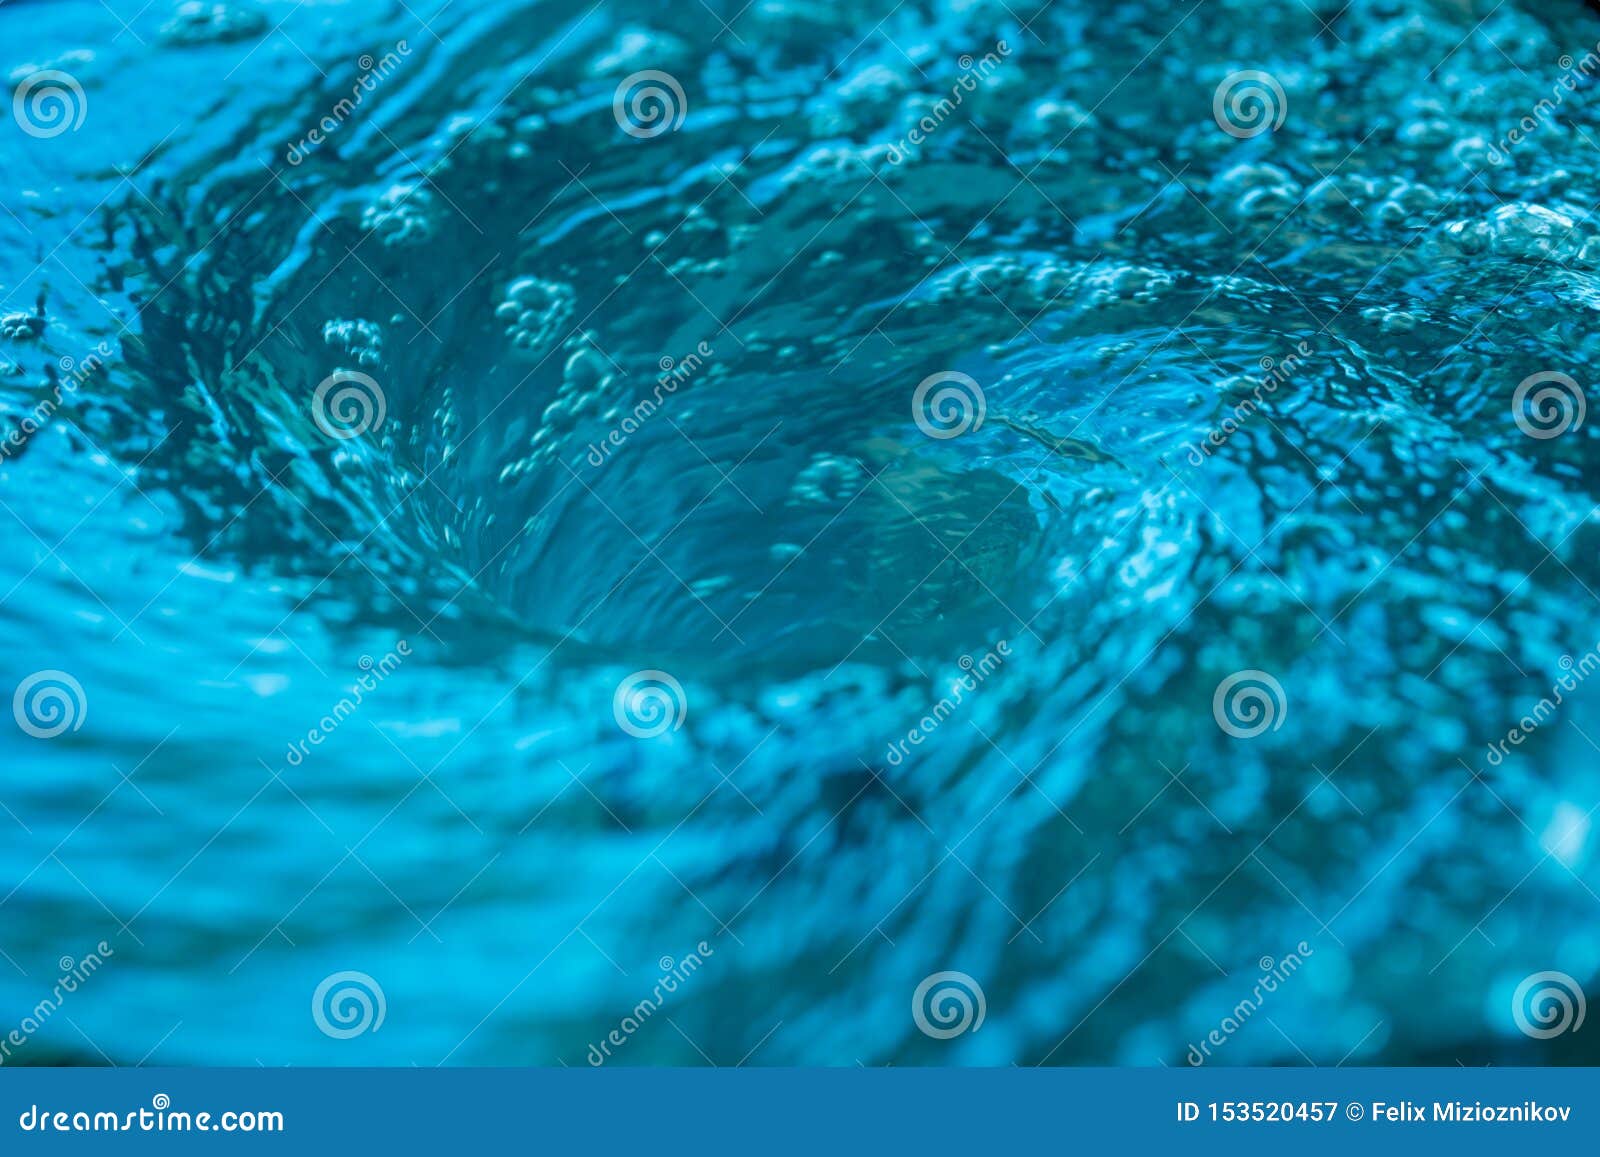 https://thumbs.dreamstime.com/z/blue-ocean-whirlpool-spinning-counter-clockwise-motion-153520457.jpg